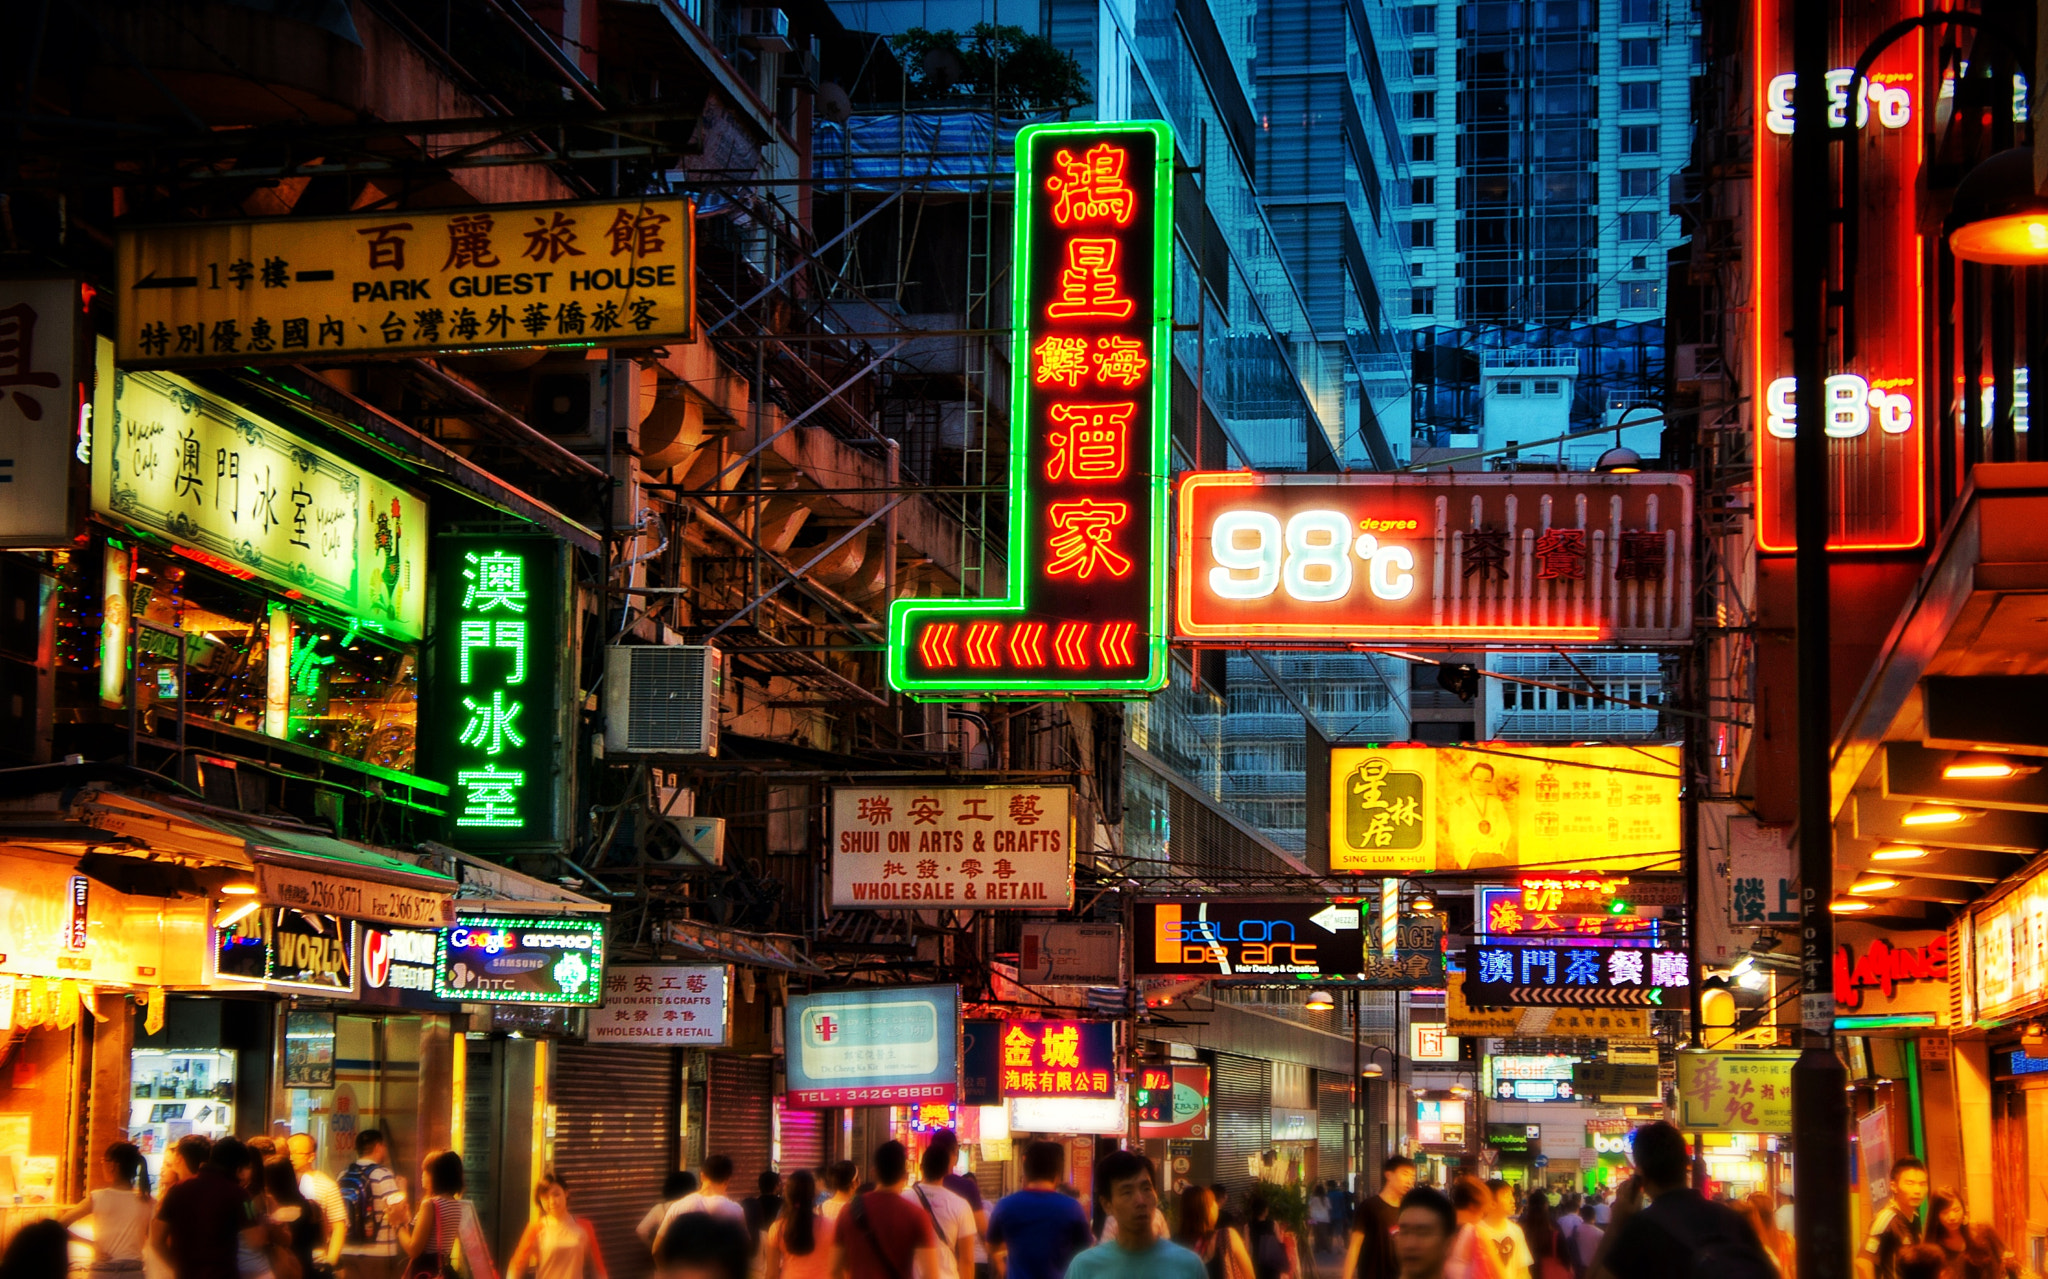 Neon Lights of Hong Kong by Tim Sze - Photo 15237453 / 500px